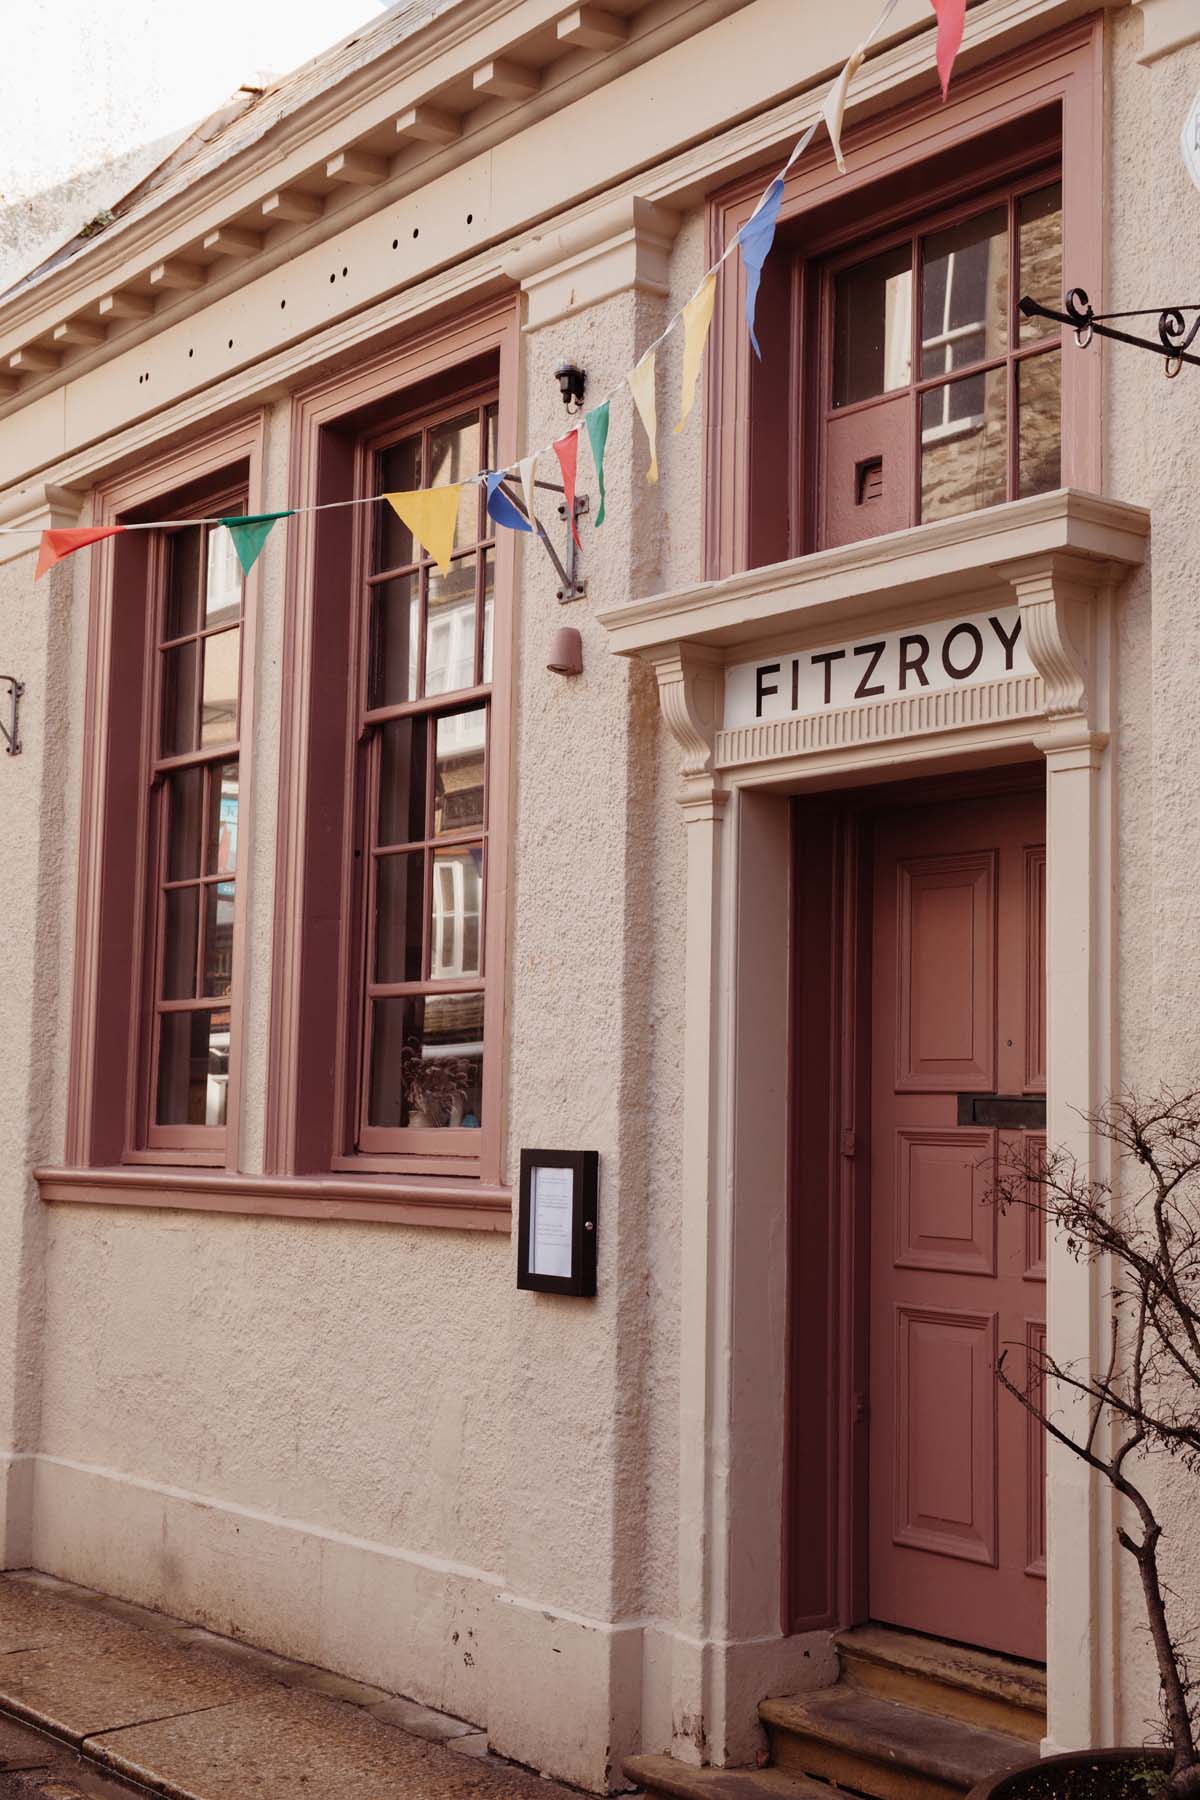 Fitzroy restaurant exterior Fowey